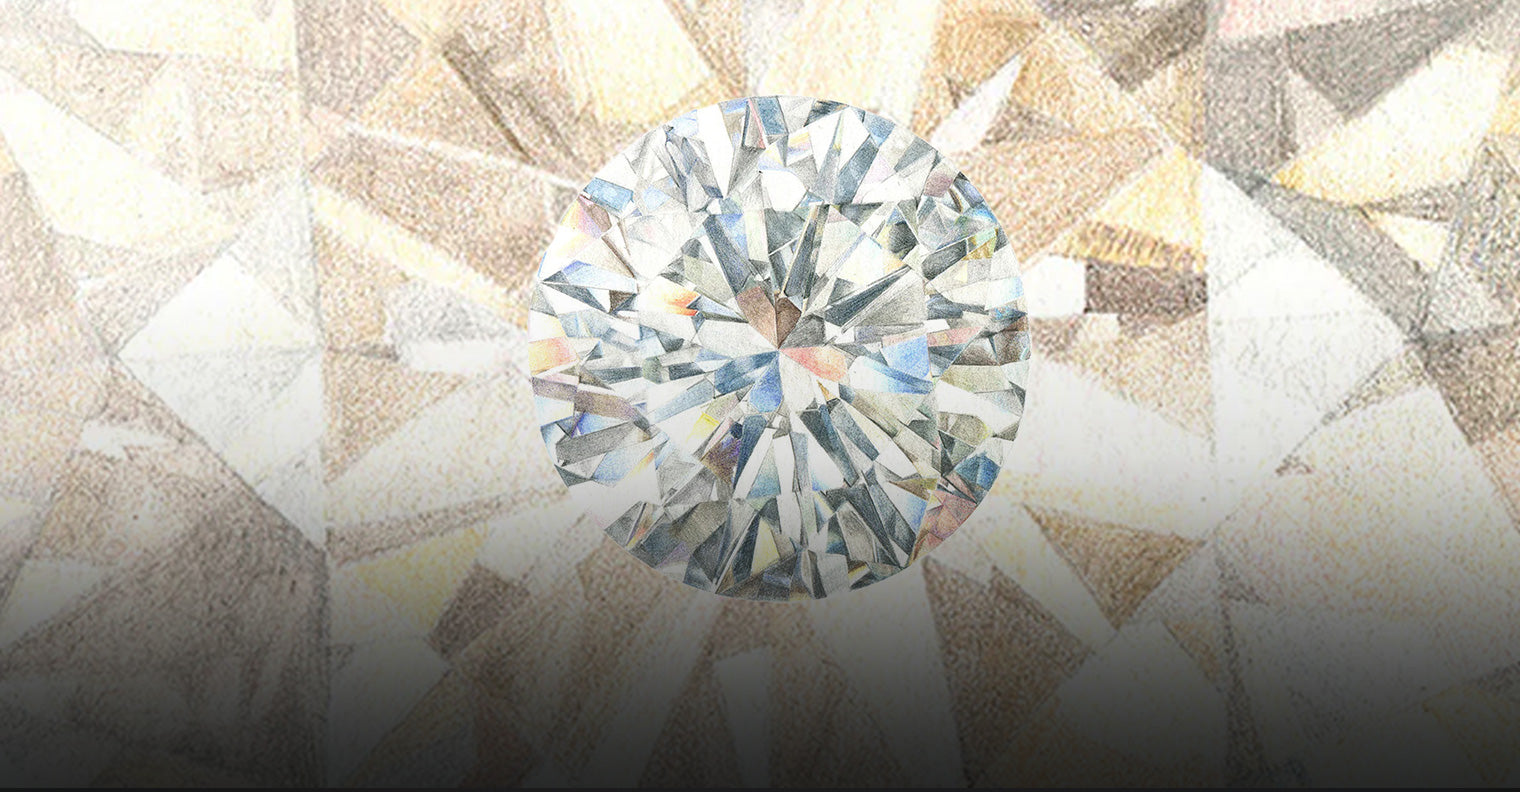 Explore the Diamond Collection